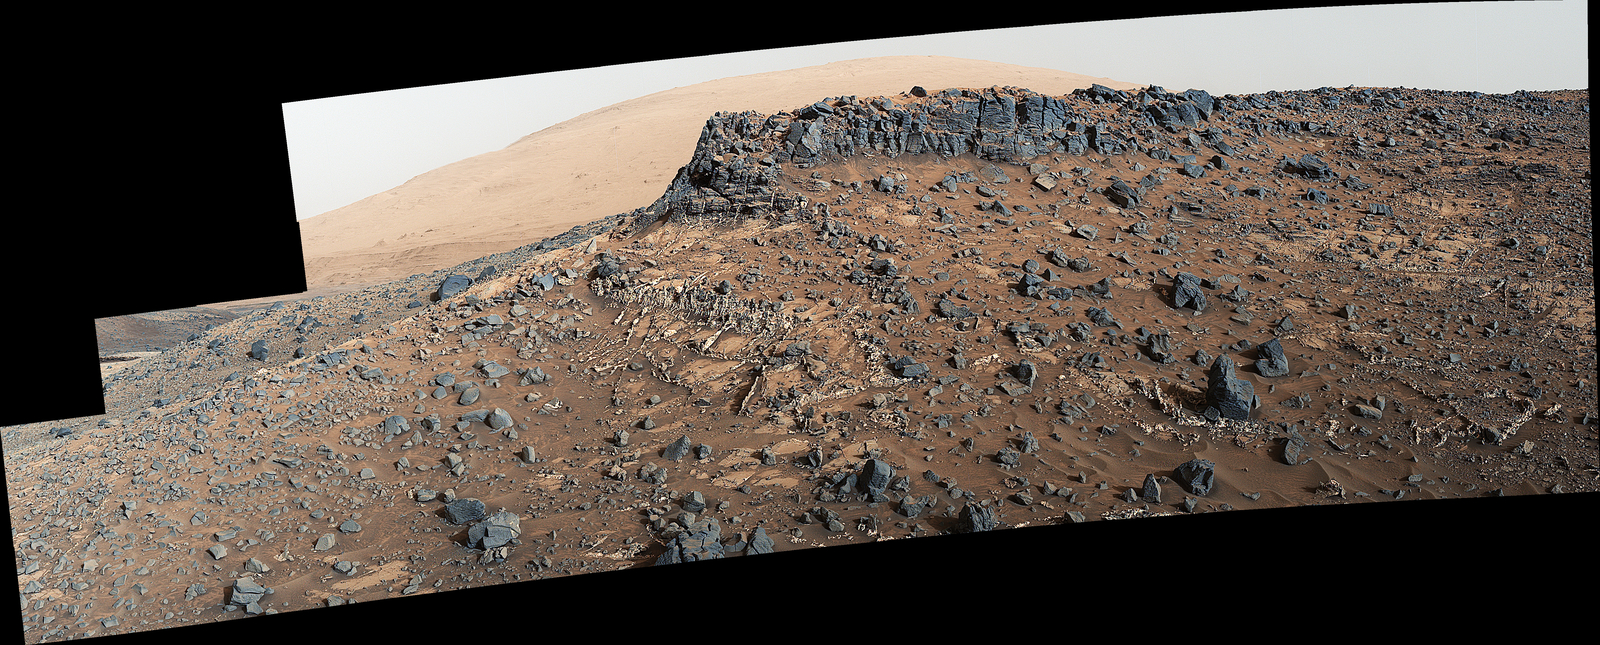 Veiny 'Garden City' Site and Surroundings on Mount Sharp, Mars